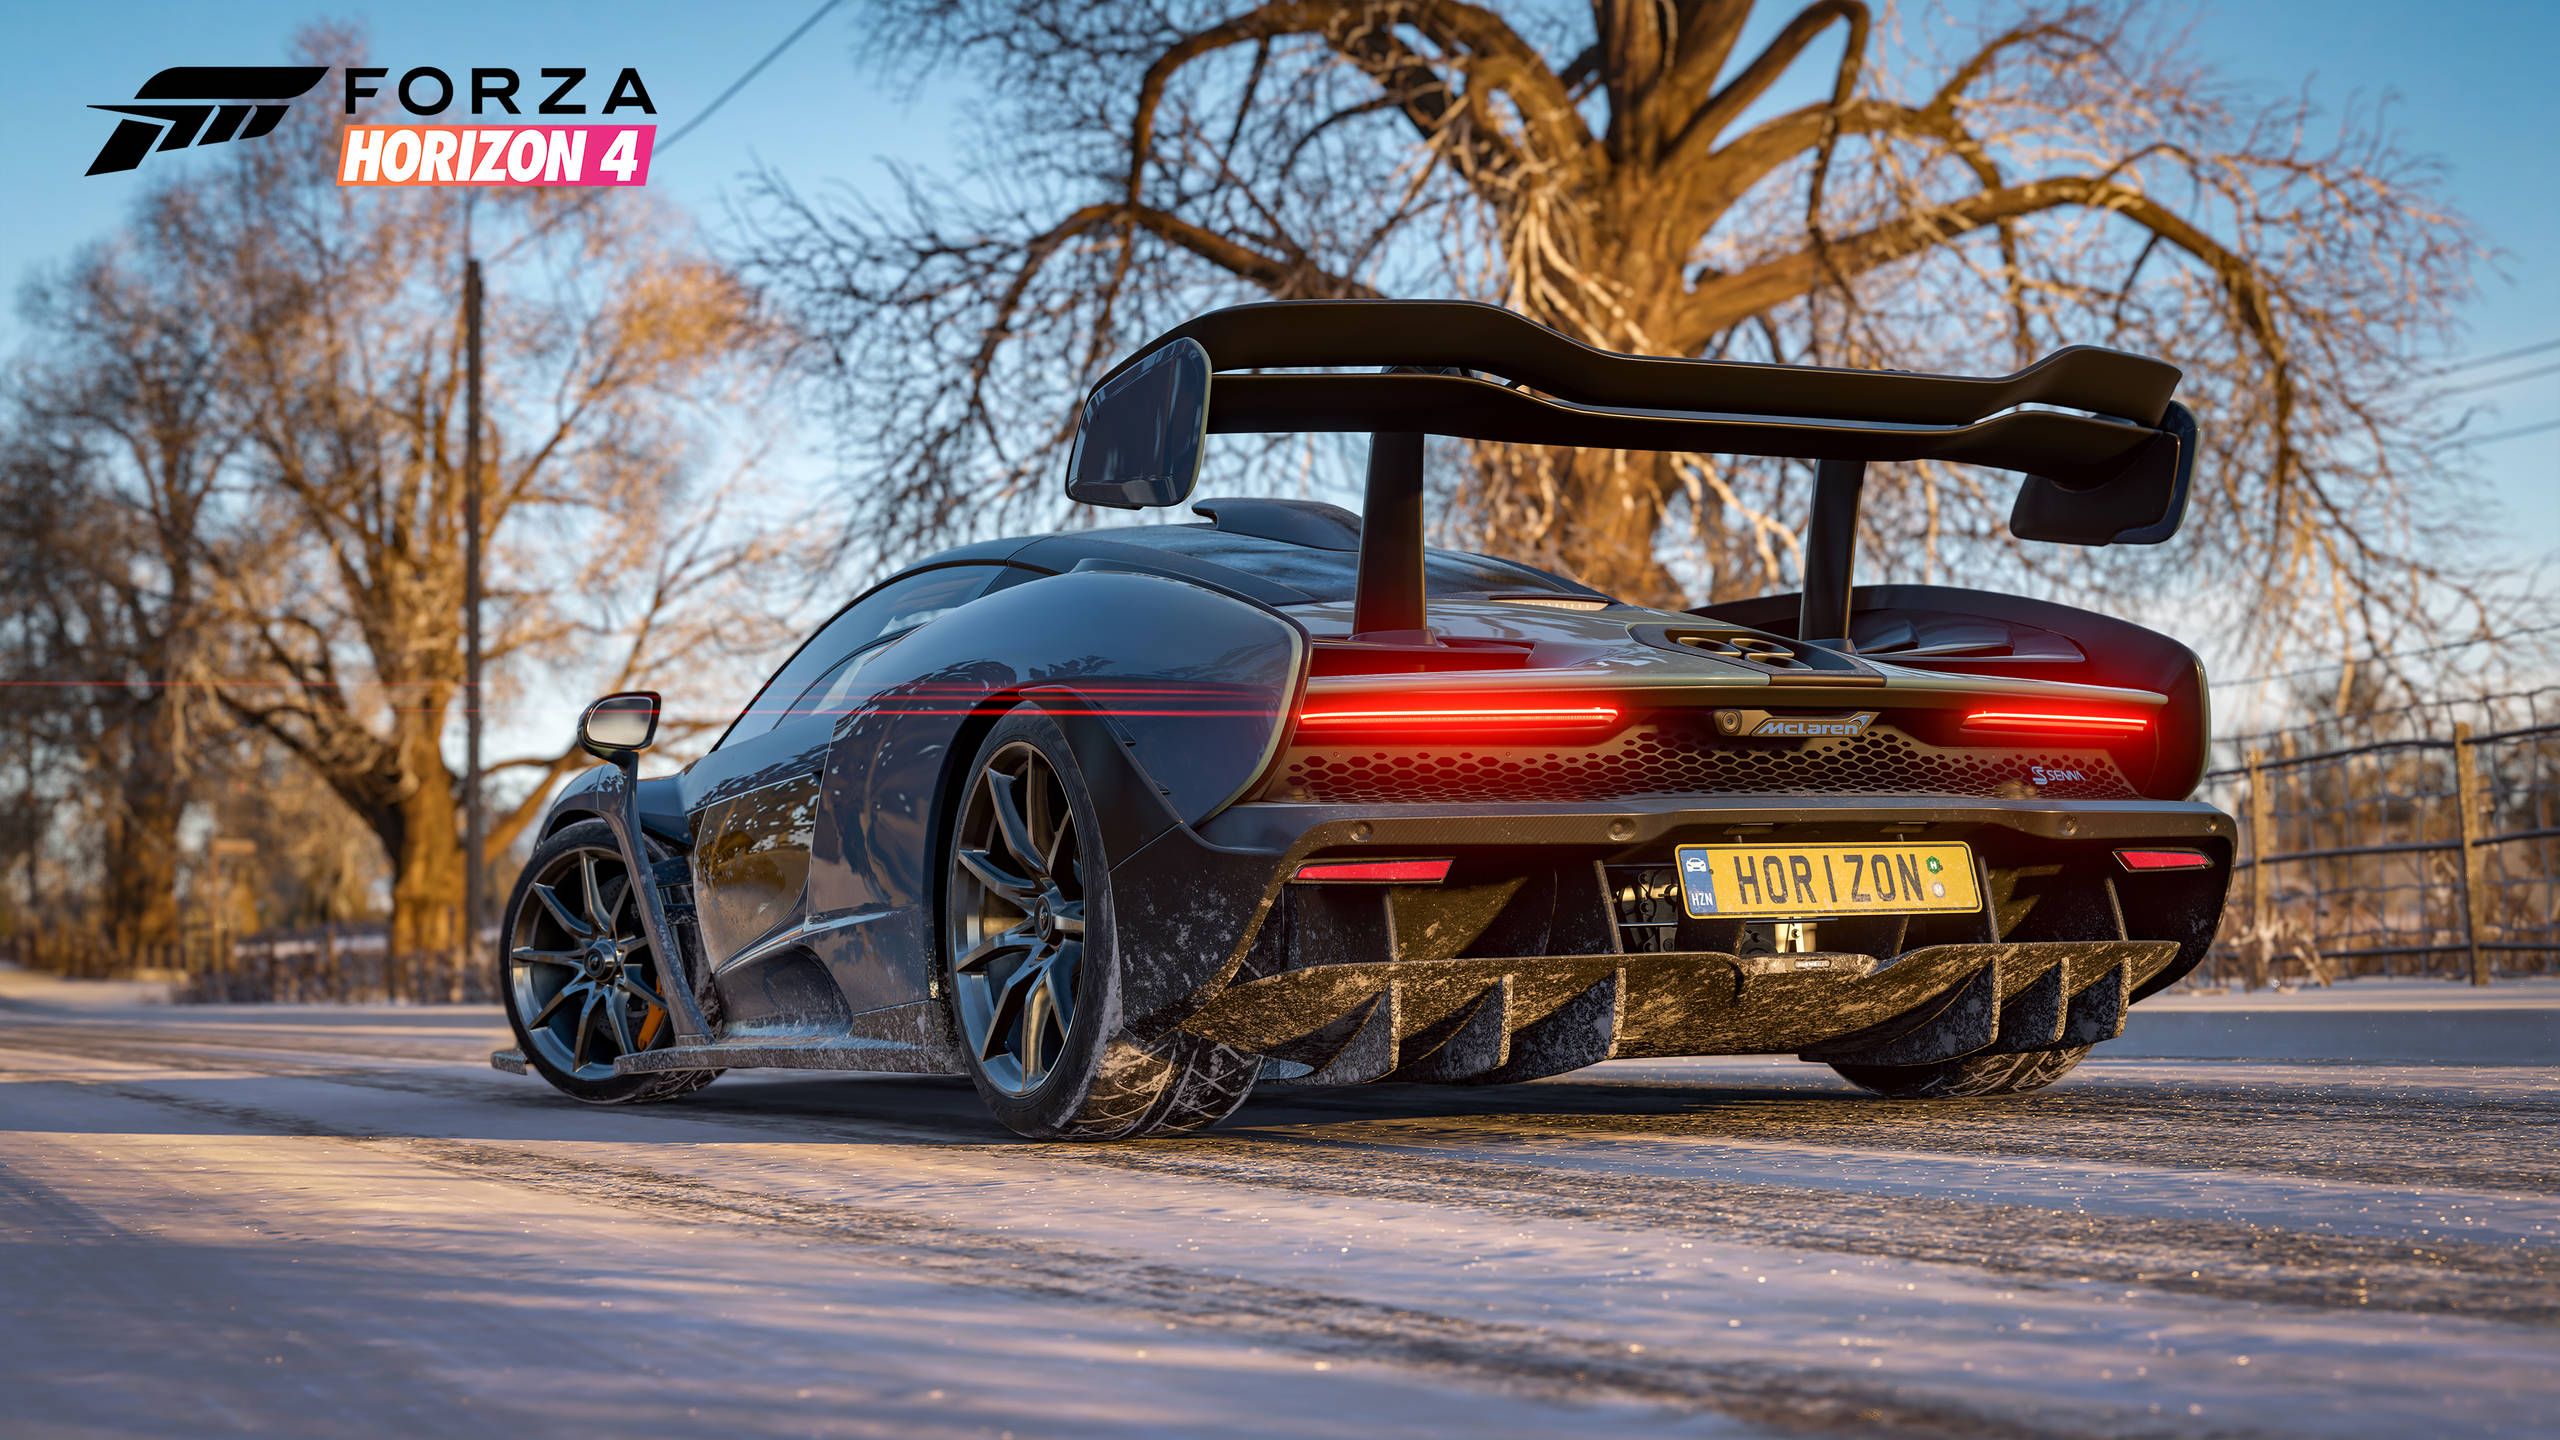 Forza Horizon 3: full car list revealed